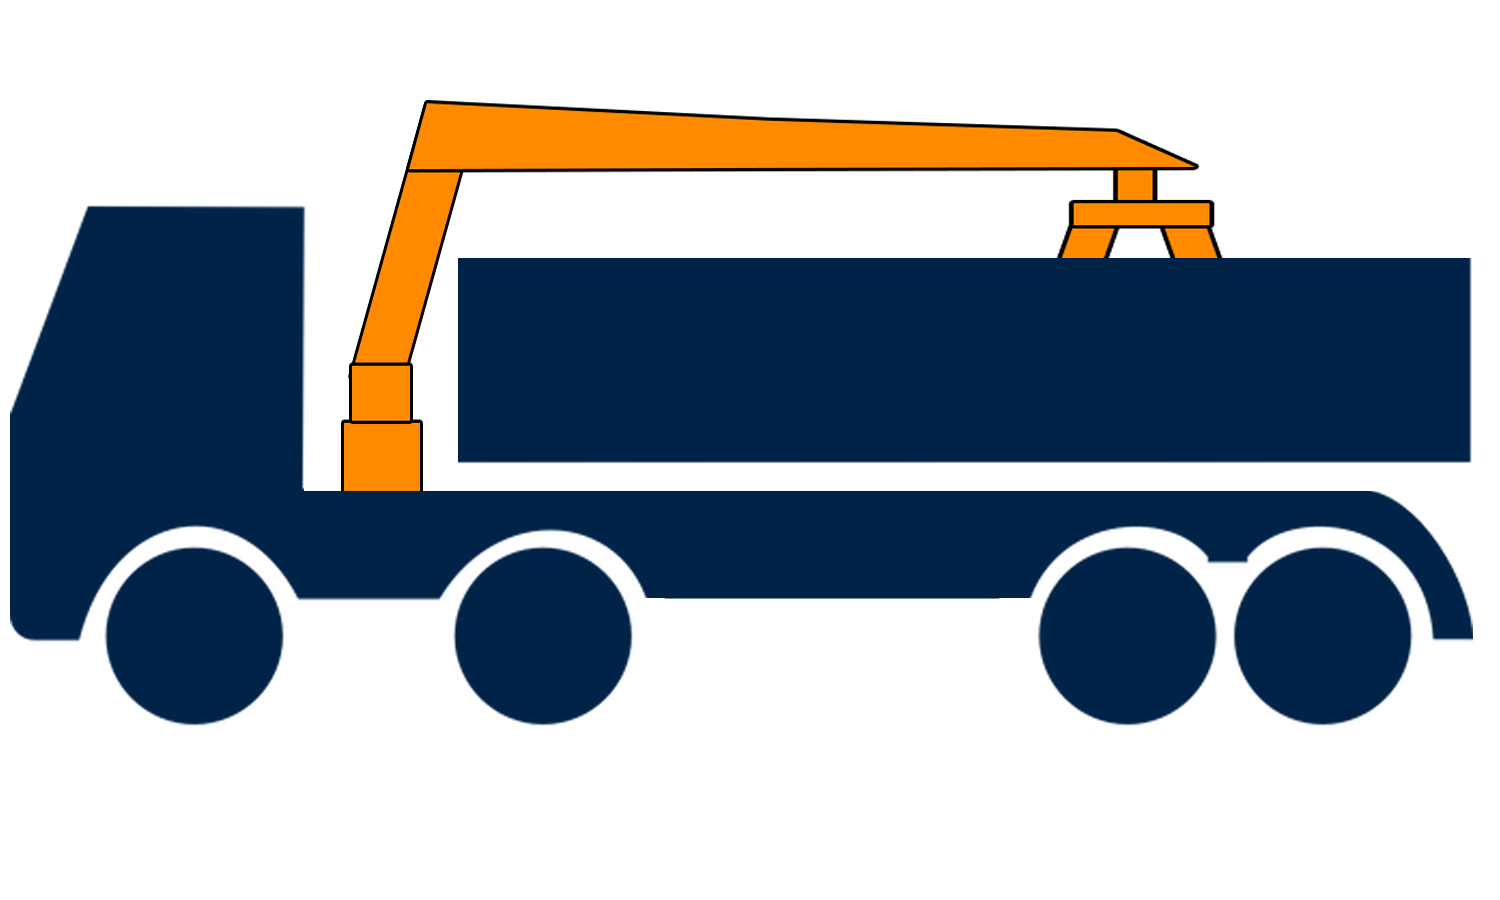 8-wheel grab lorry hire in London